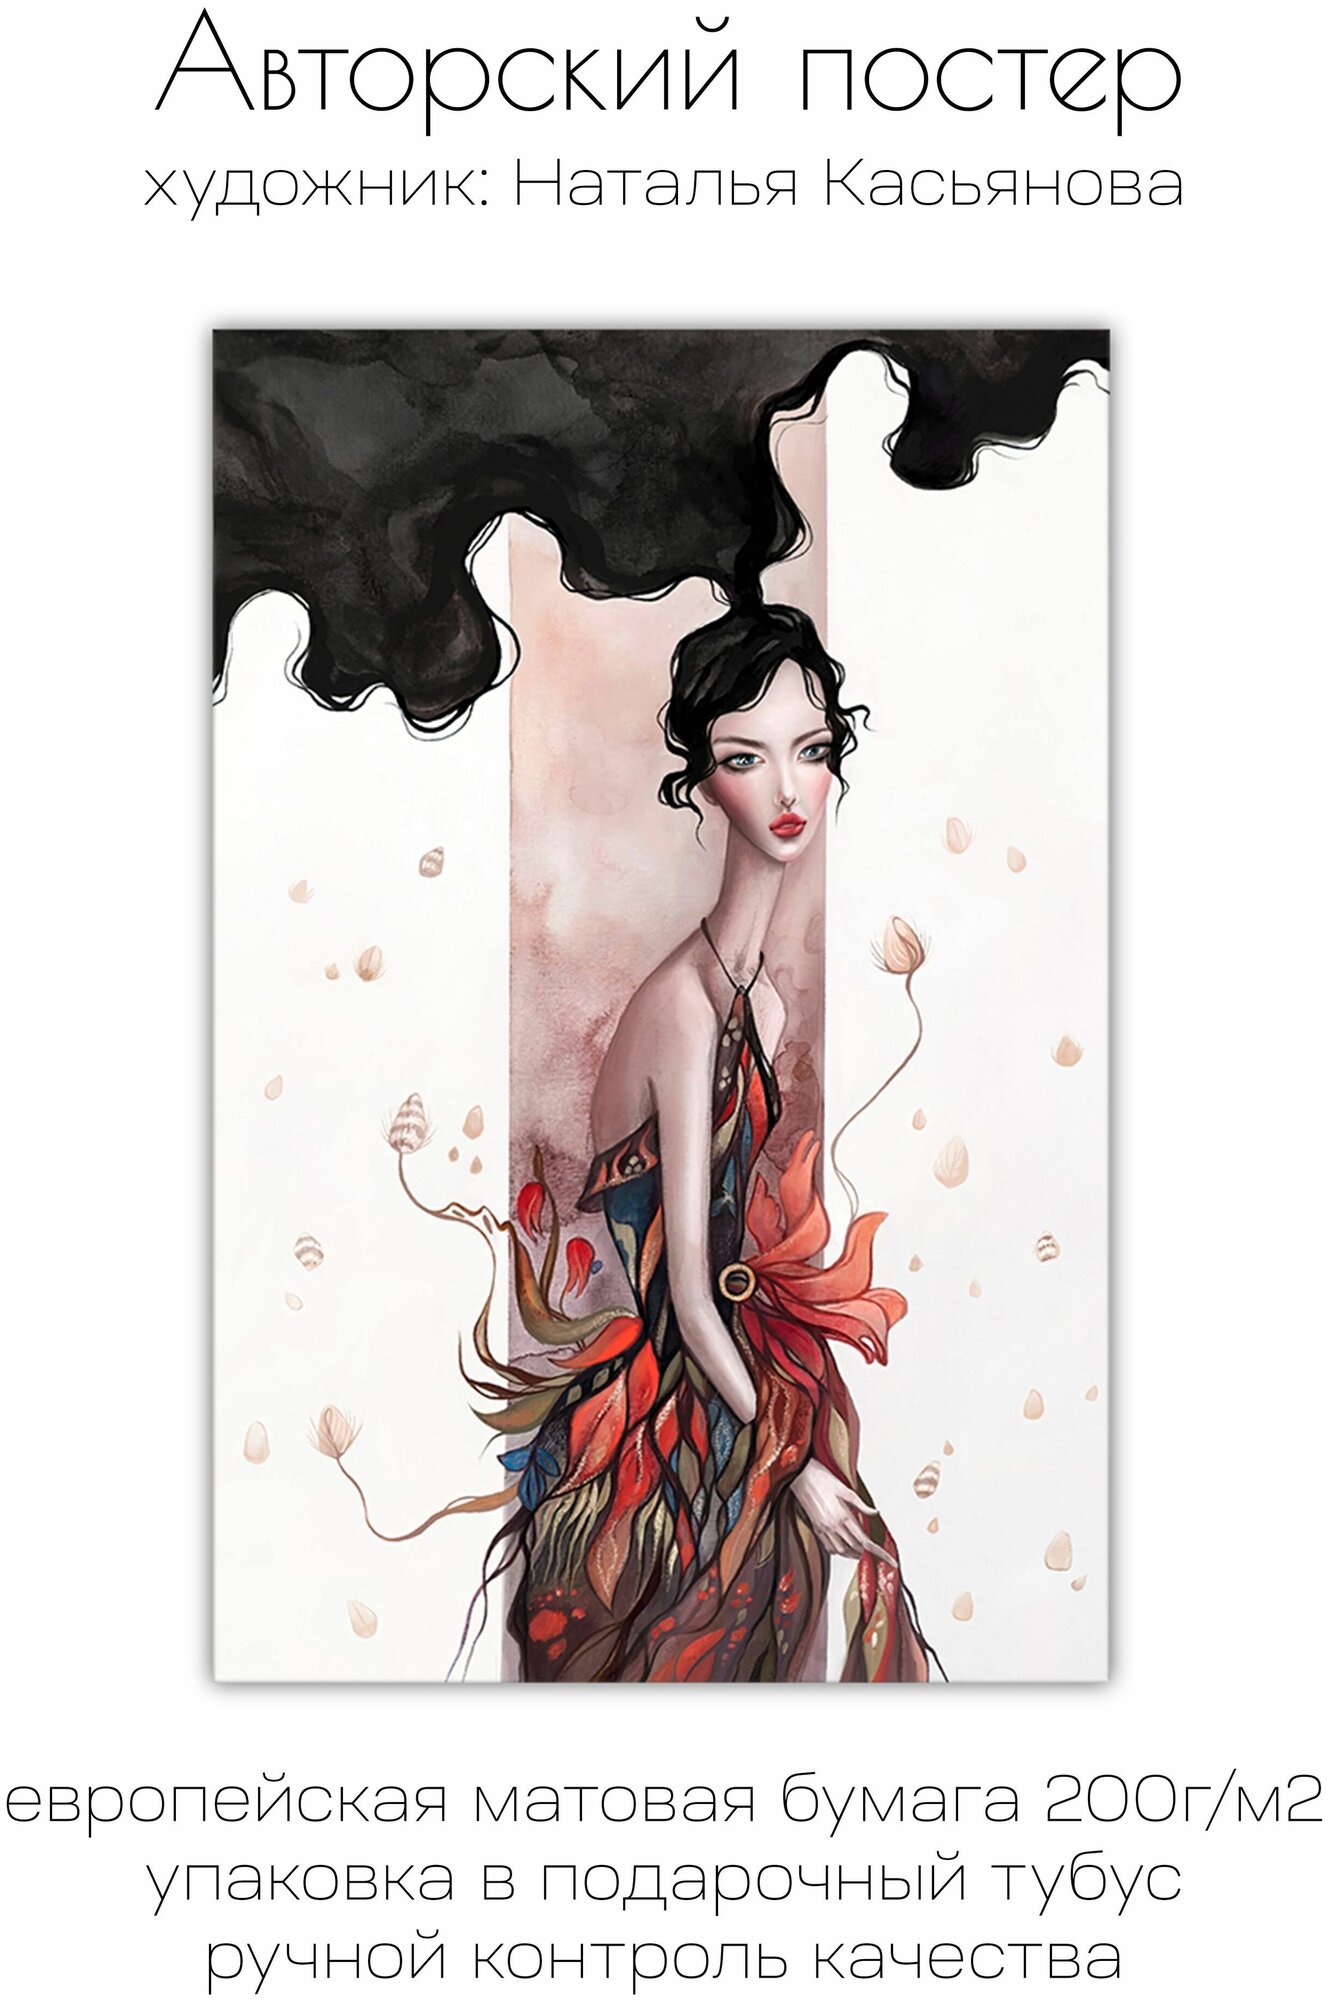 Интерьерный постер 50х70см "Surreal floral art", Наталья Касьянова от Gallery 5 Store